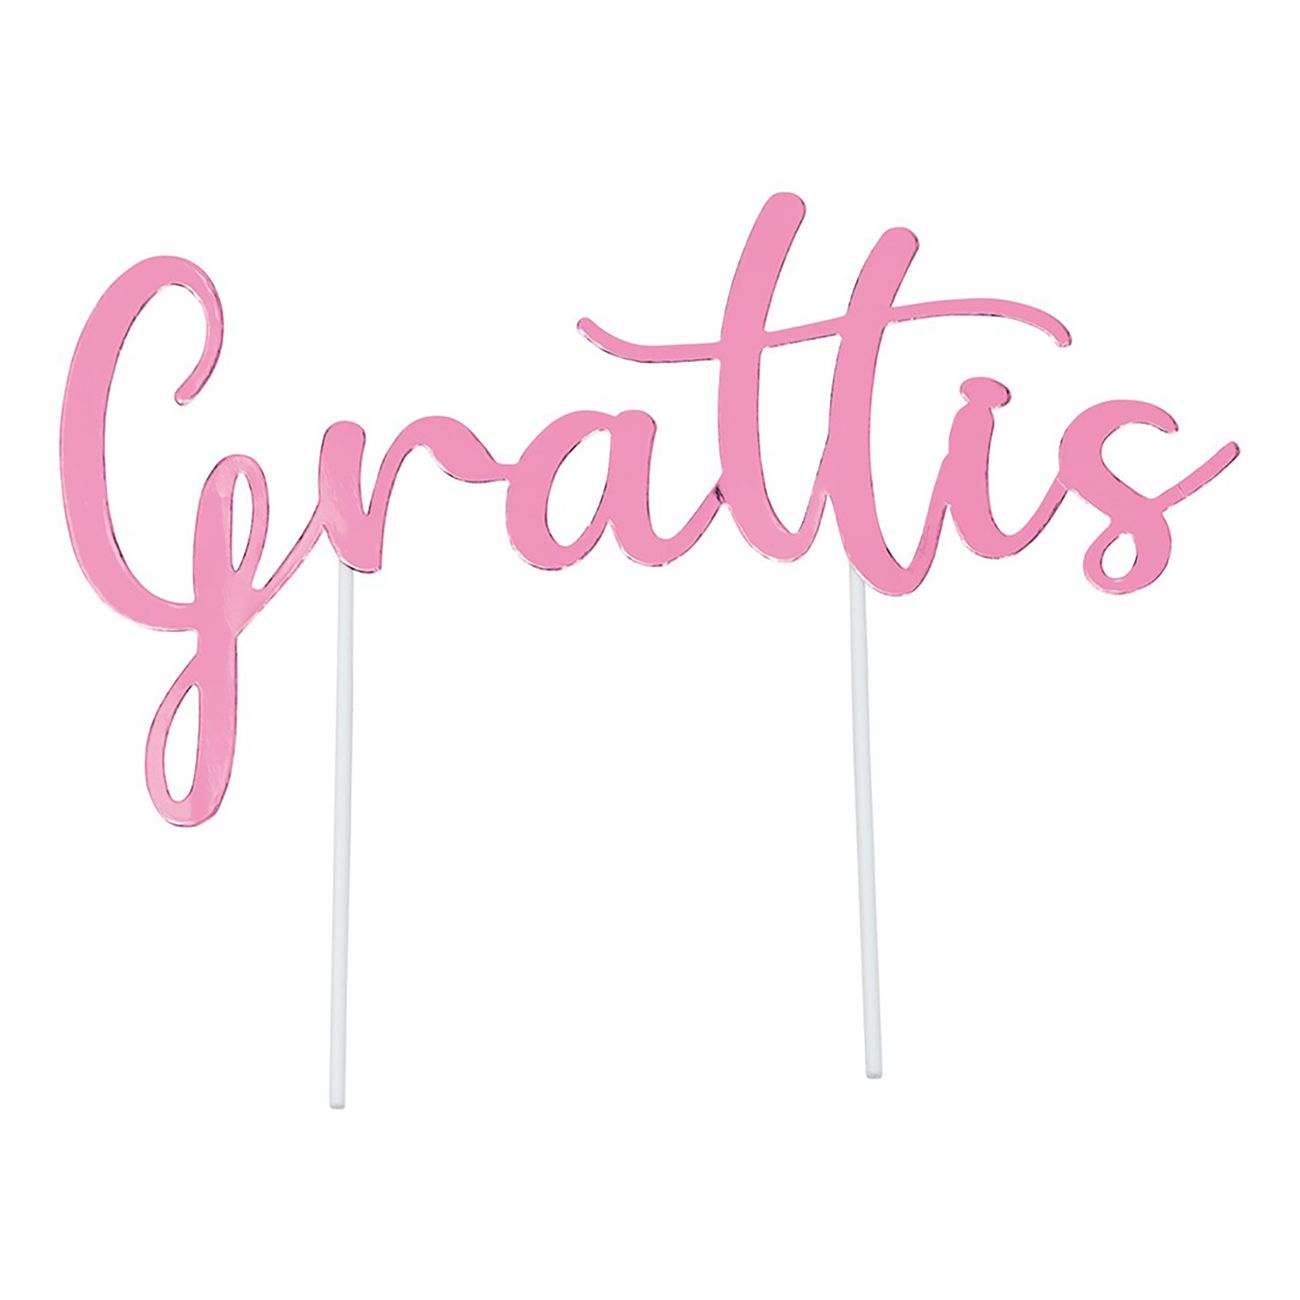 tartdekoration-grattis-rosa-91858-1